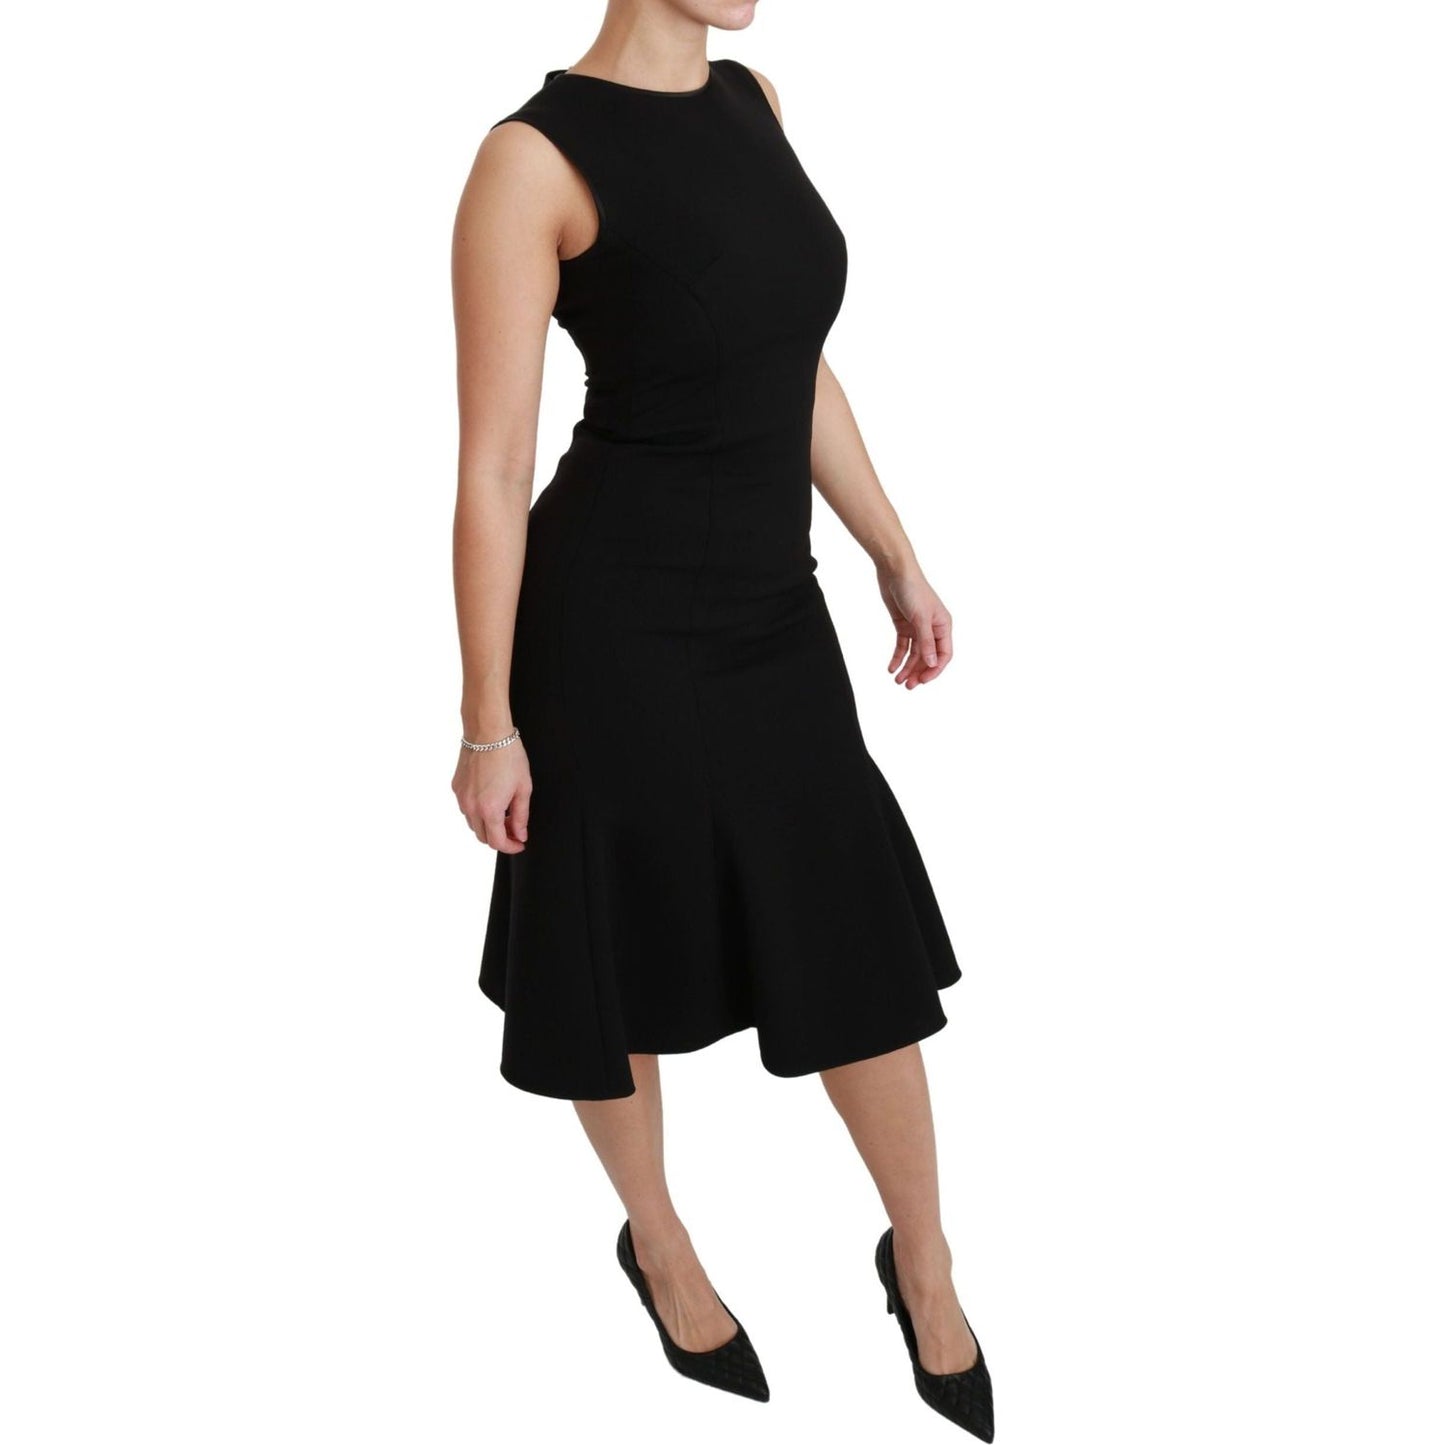 Dolce & Gabbana Elegant Black Fit Flare Wool Blend Dress black-fit-flare-wool-stretch-sheath-dress WOMAN DRESSES IMG_6965-scaled-fef41a15-fc6.jpg